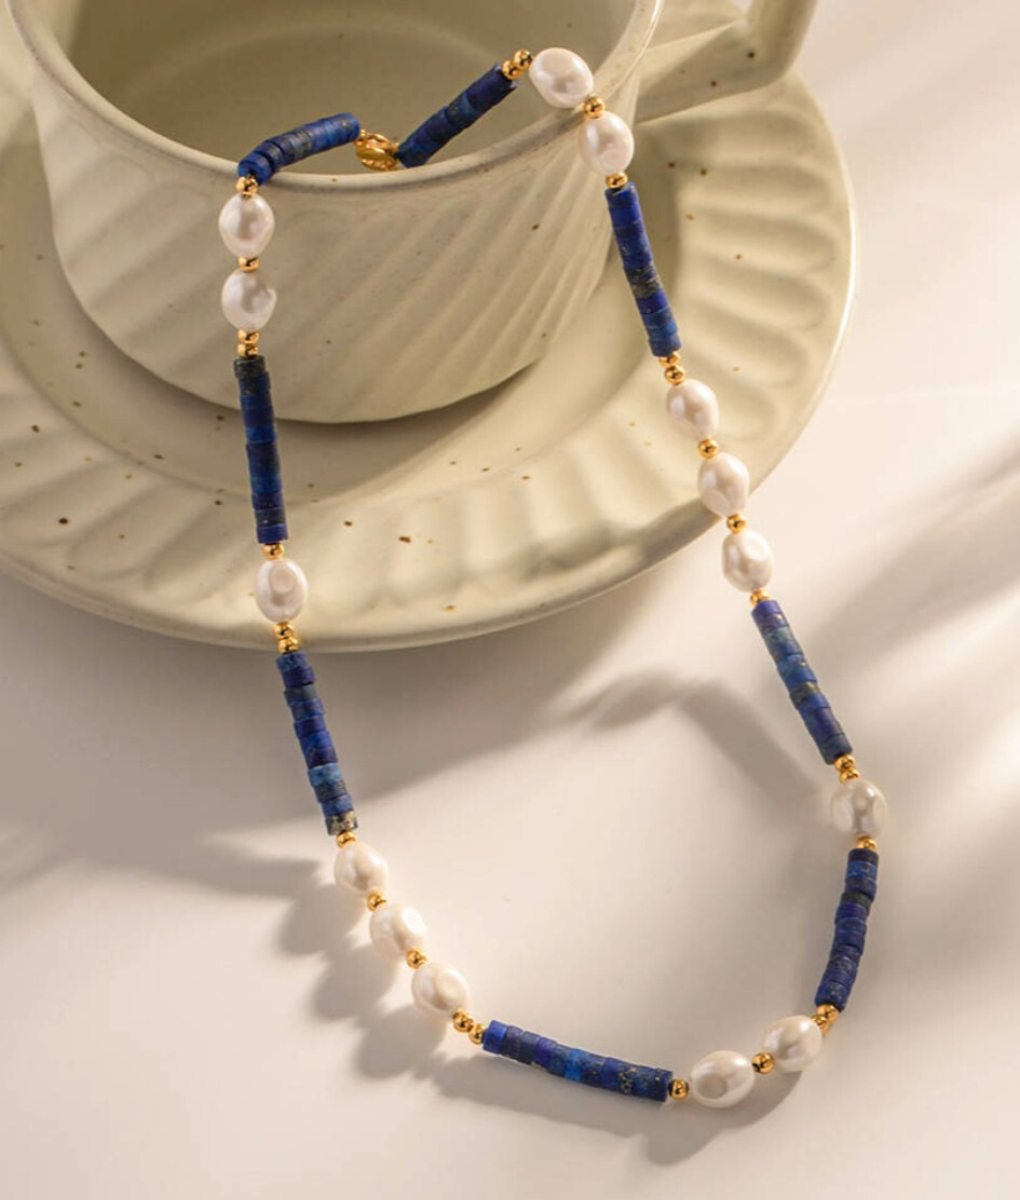 The Iris Beads Necklace